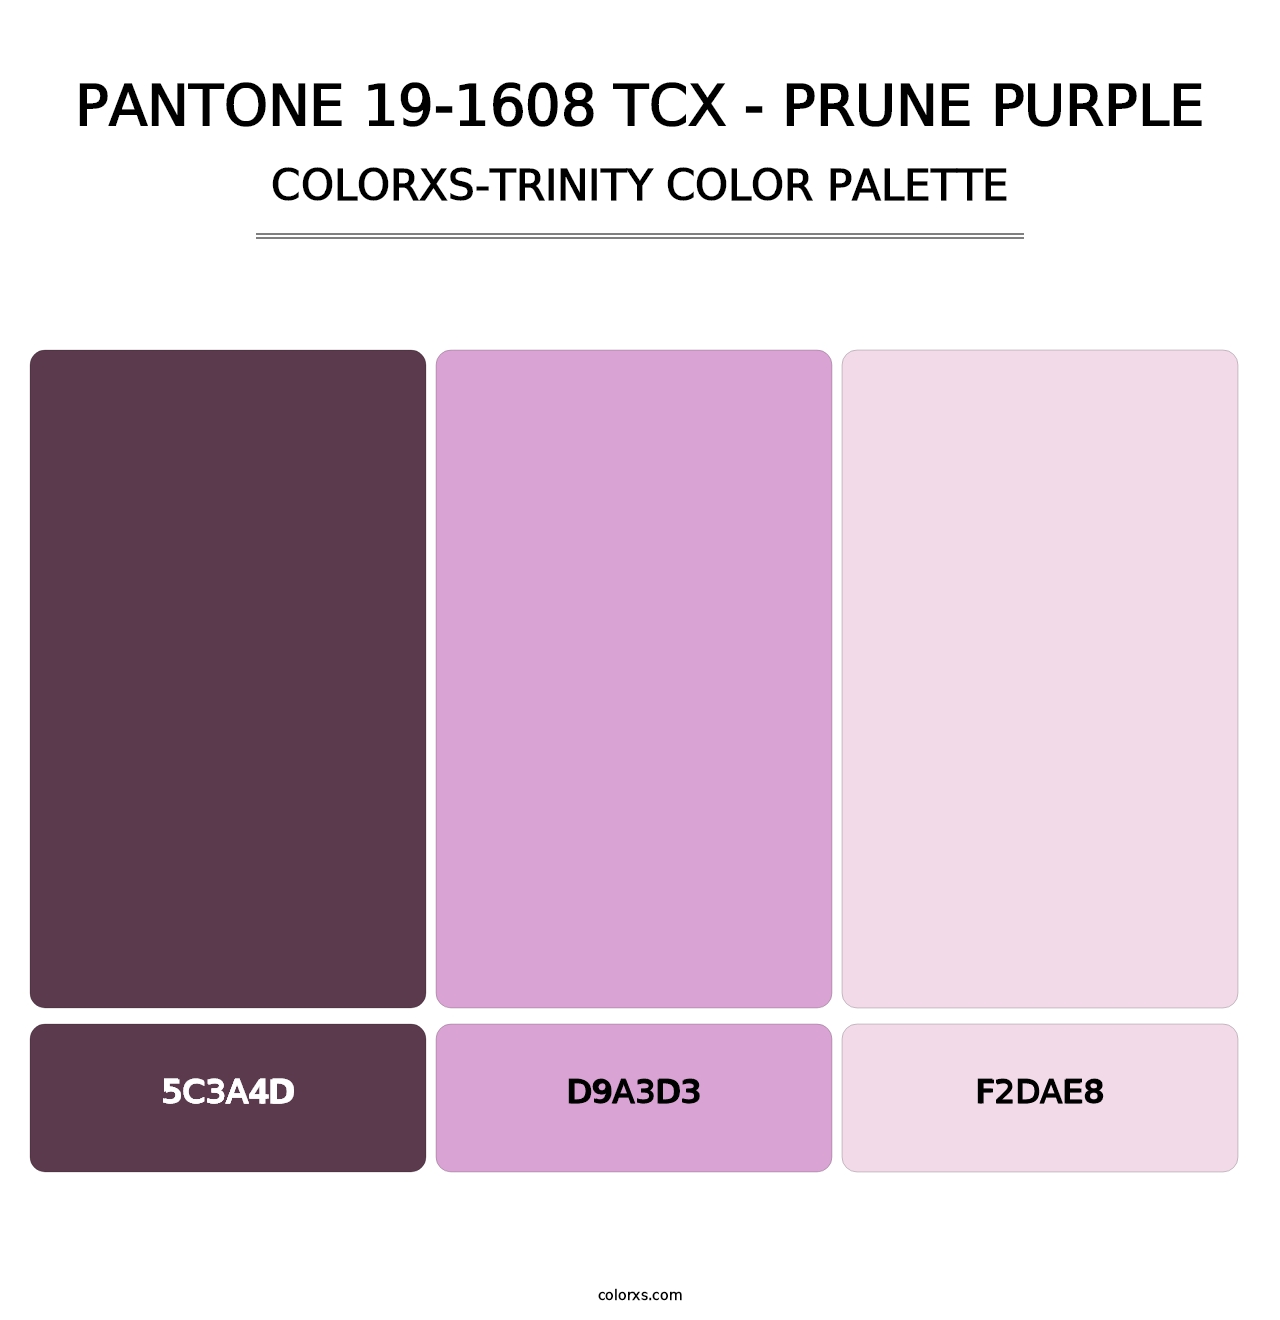 PANTONE 19-1608 TCX - Prune Purple - Colorxs Trinity Palette